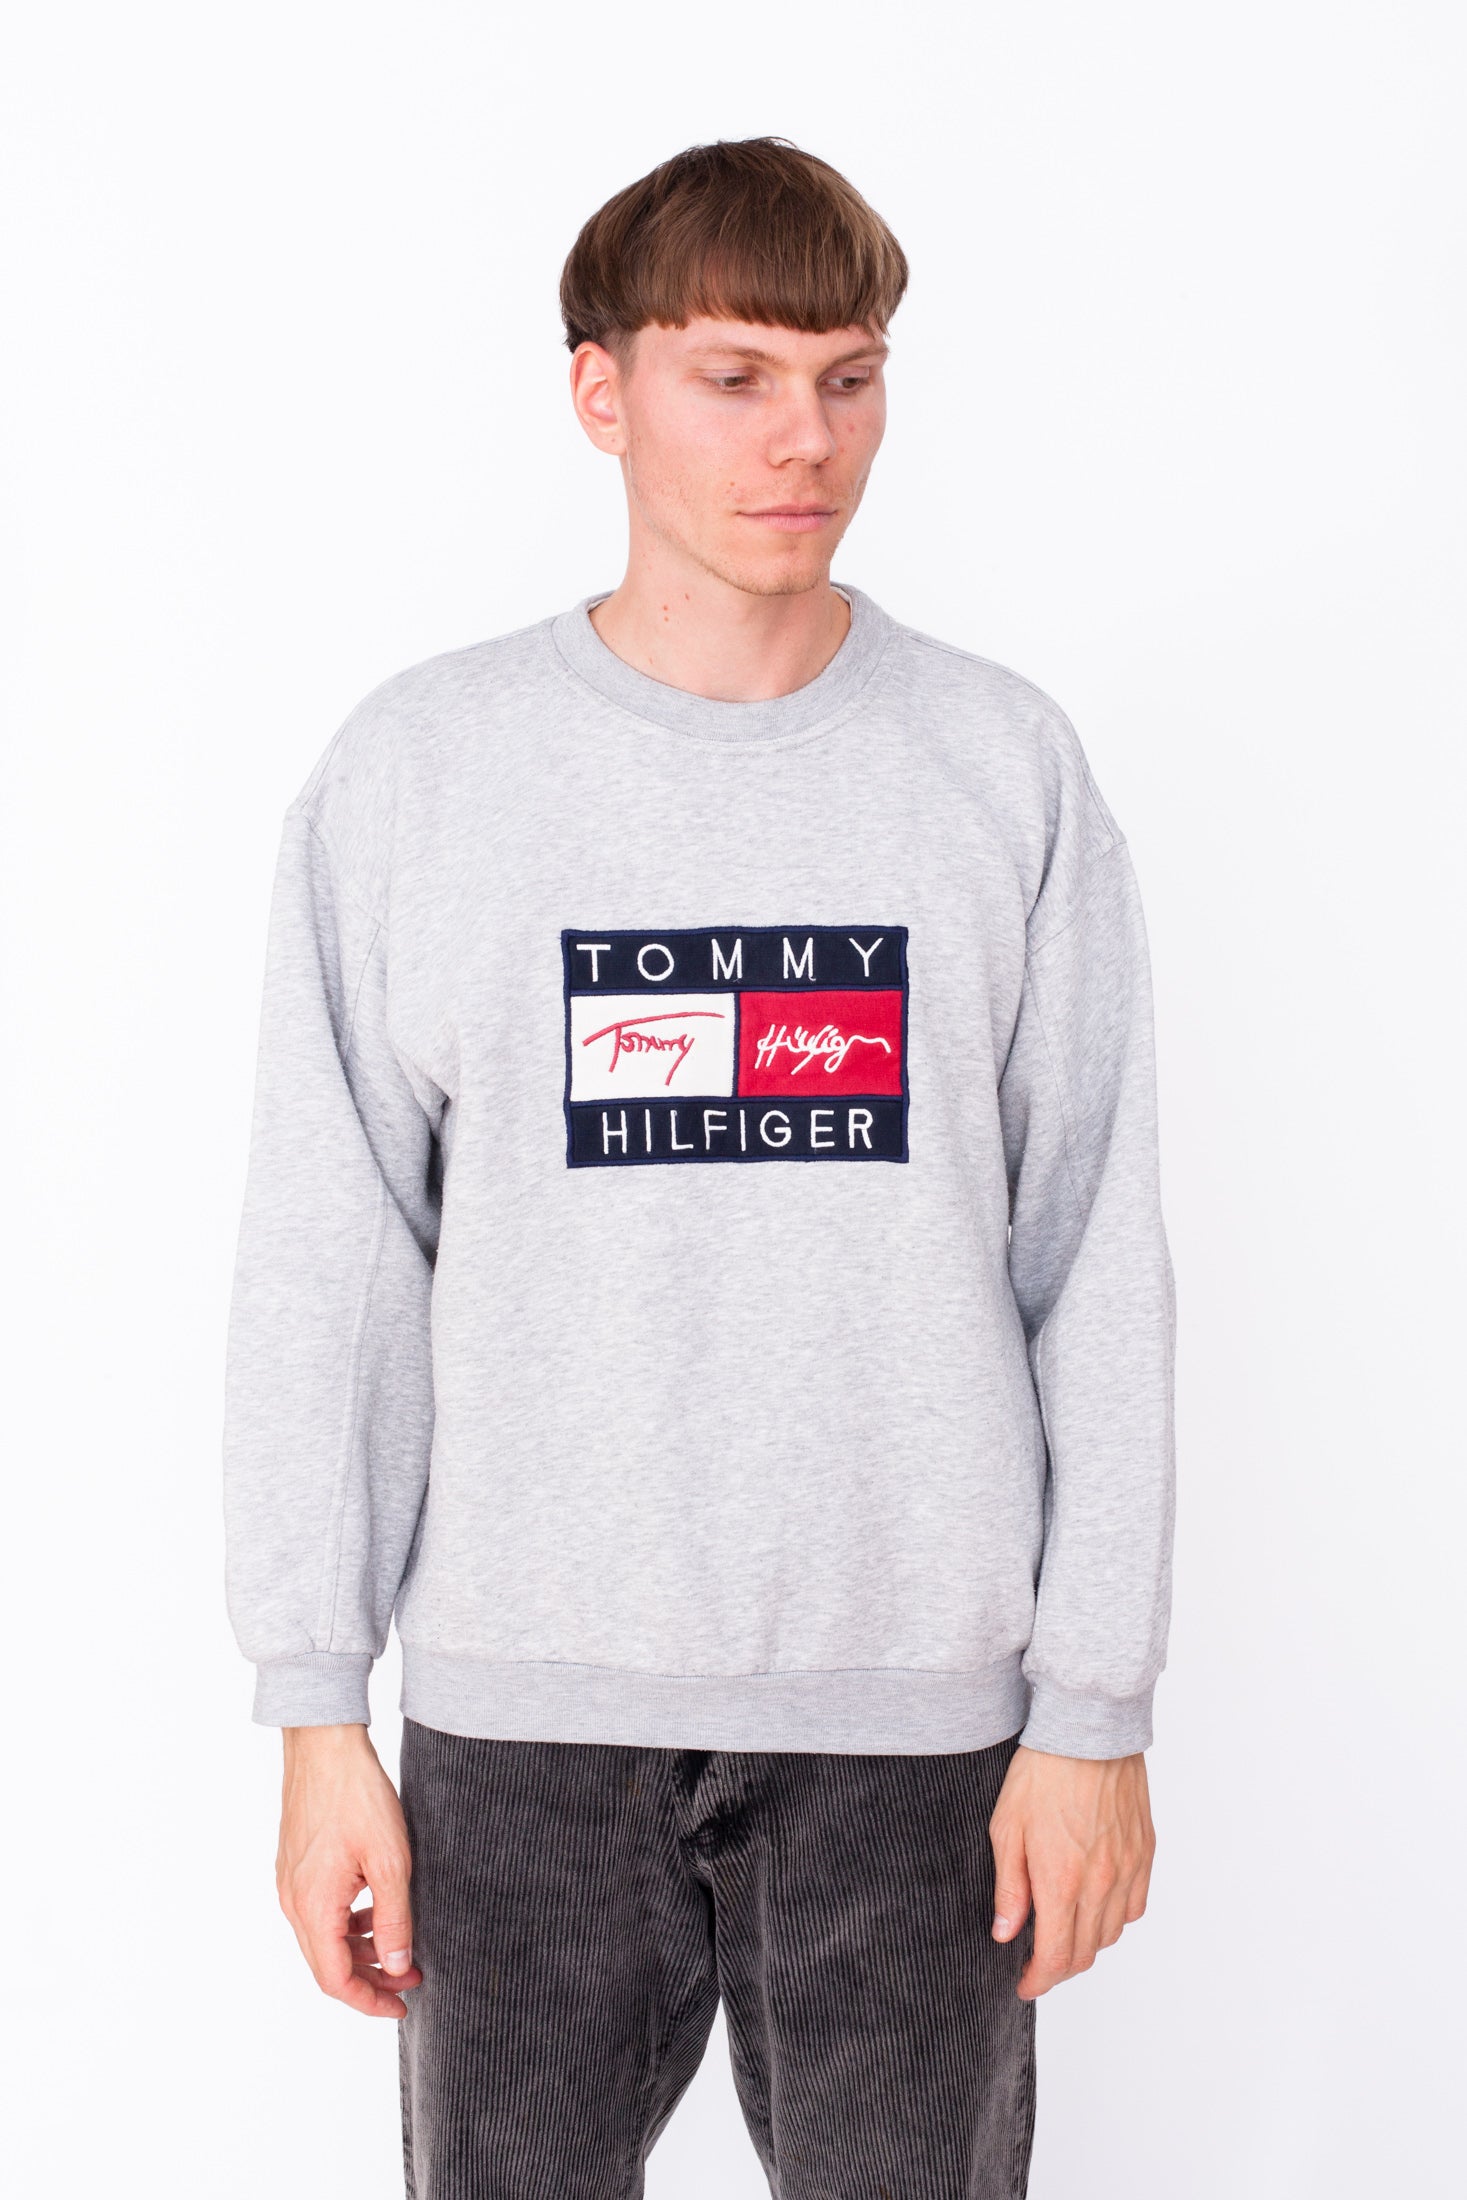 RARE Vintage 90s Tommy Hilfiger Big Logo Sweatshirt – Not Too Sweet